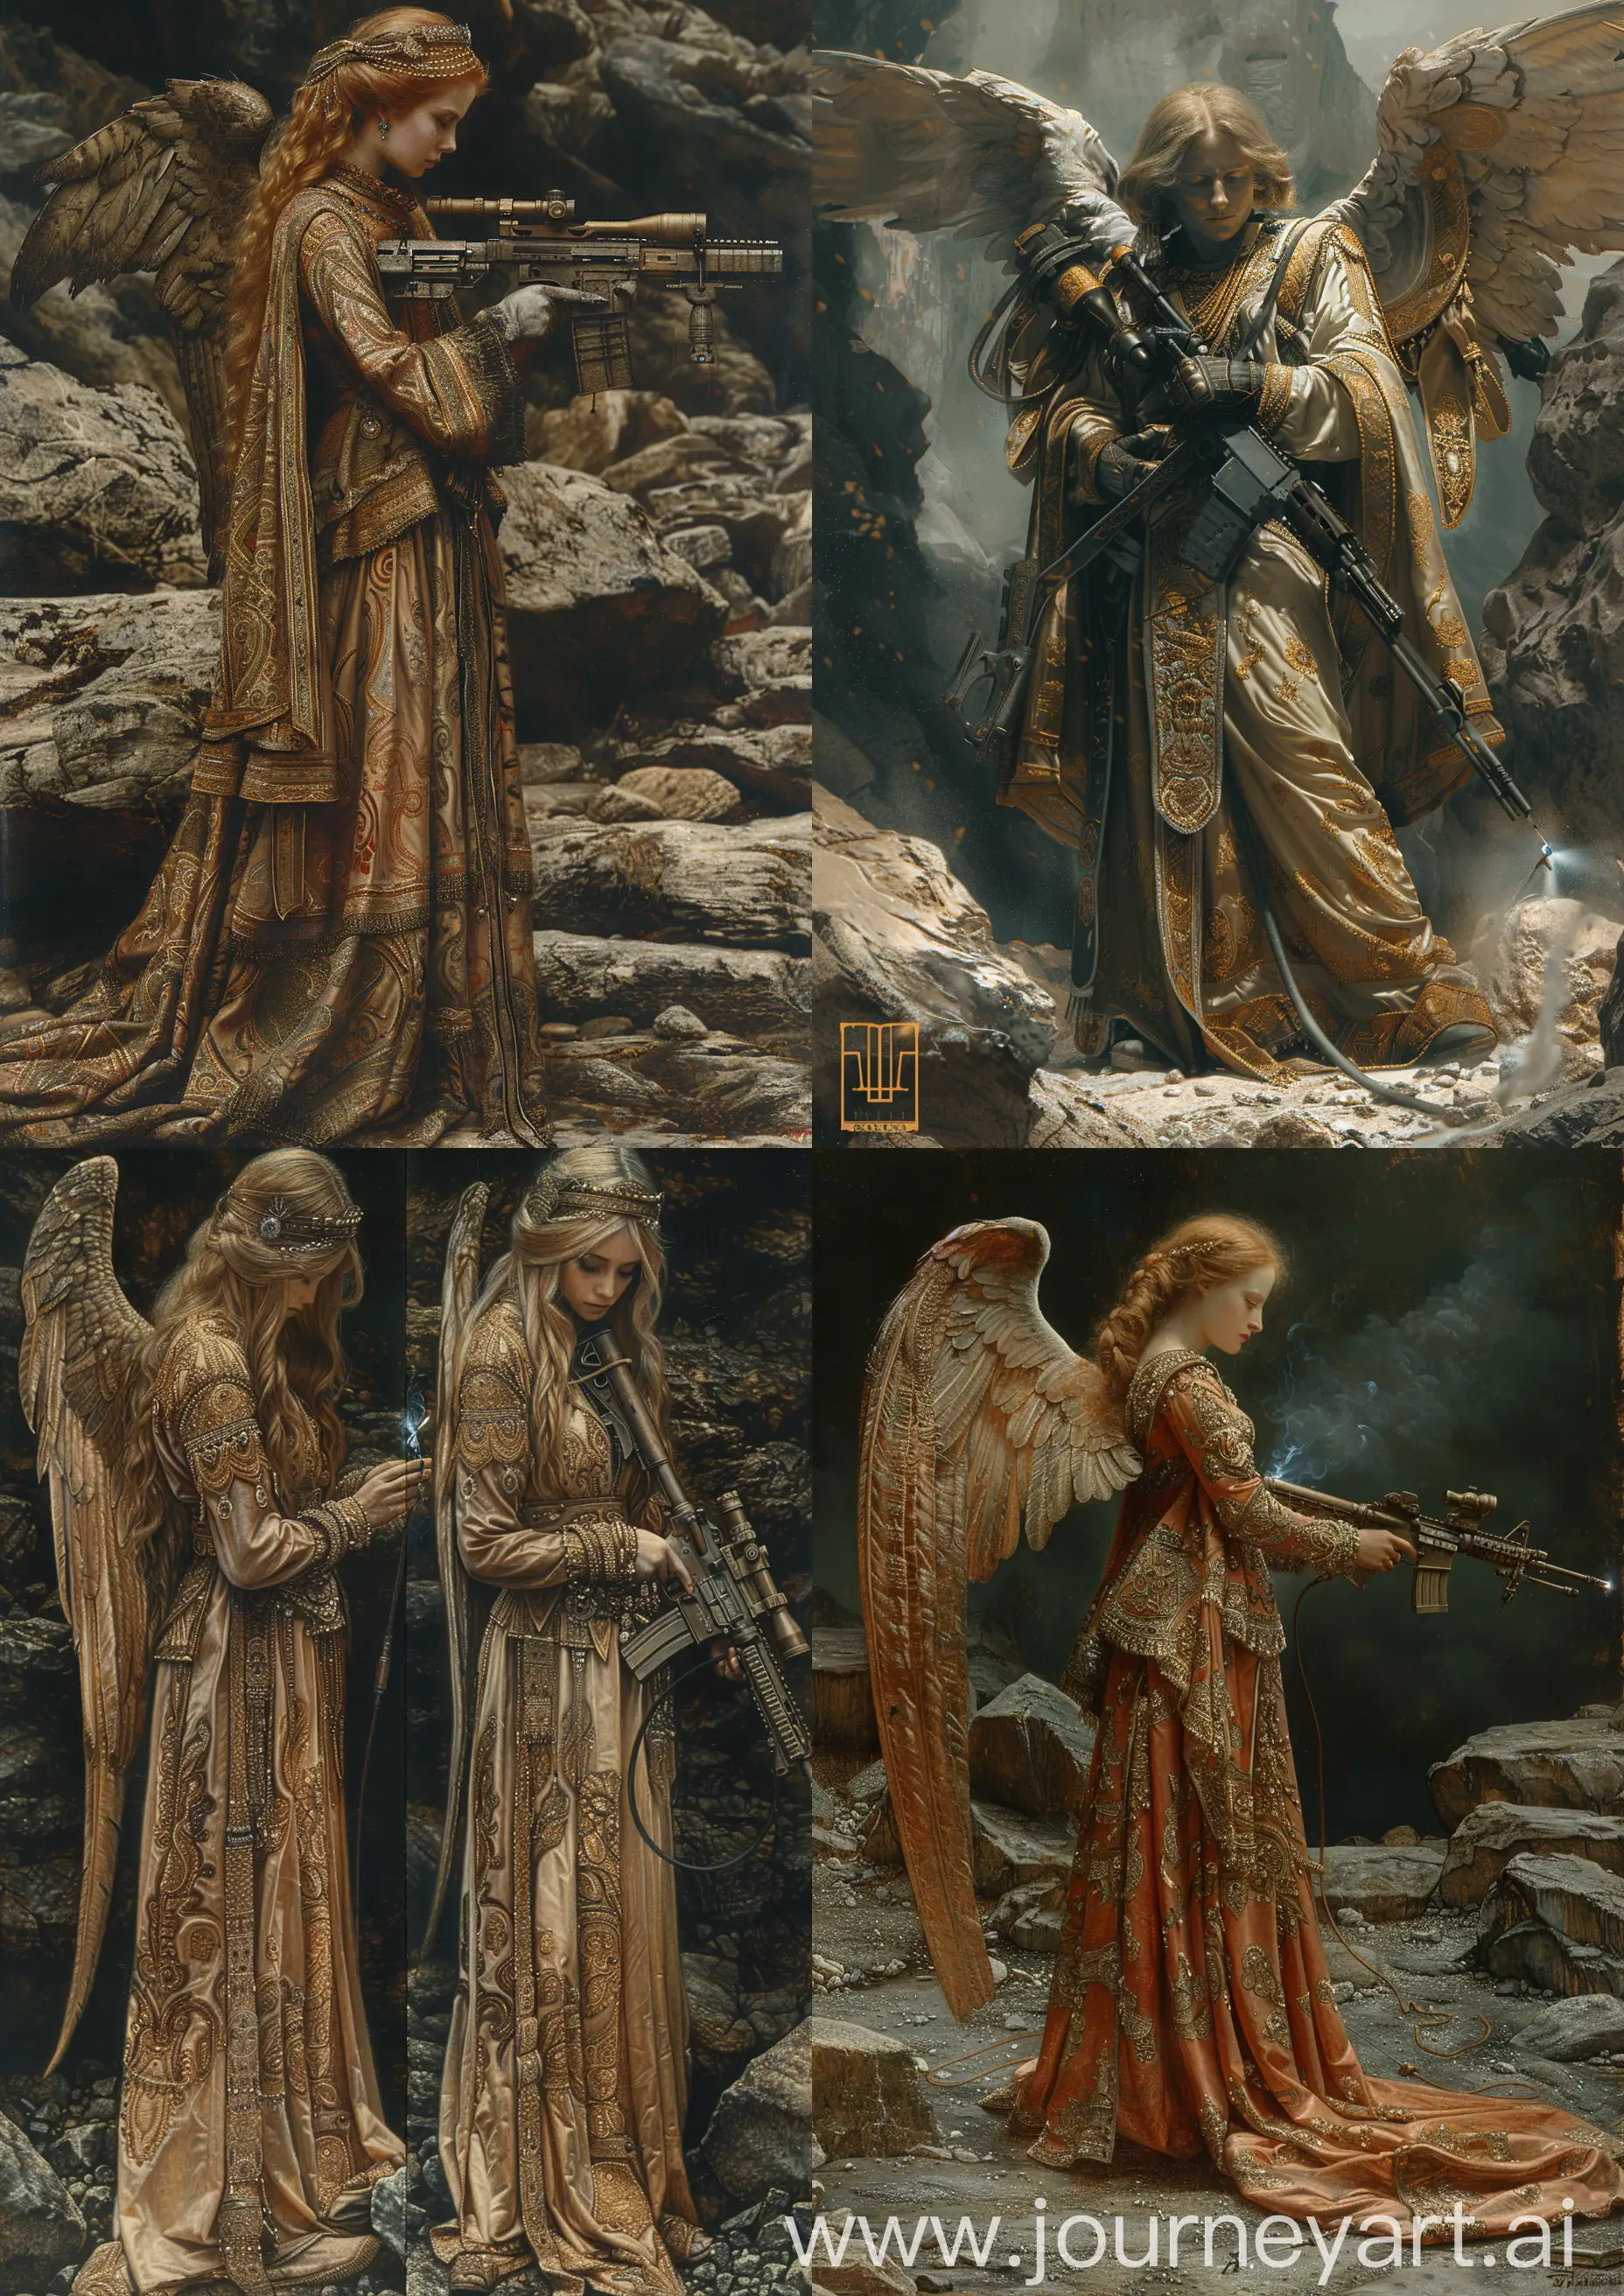 Ornate-Silk-Robed-Female-Angel-Warrior-with-M16-Rifle-on-Rocky-Terrain